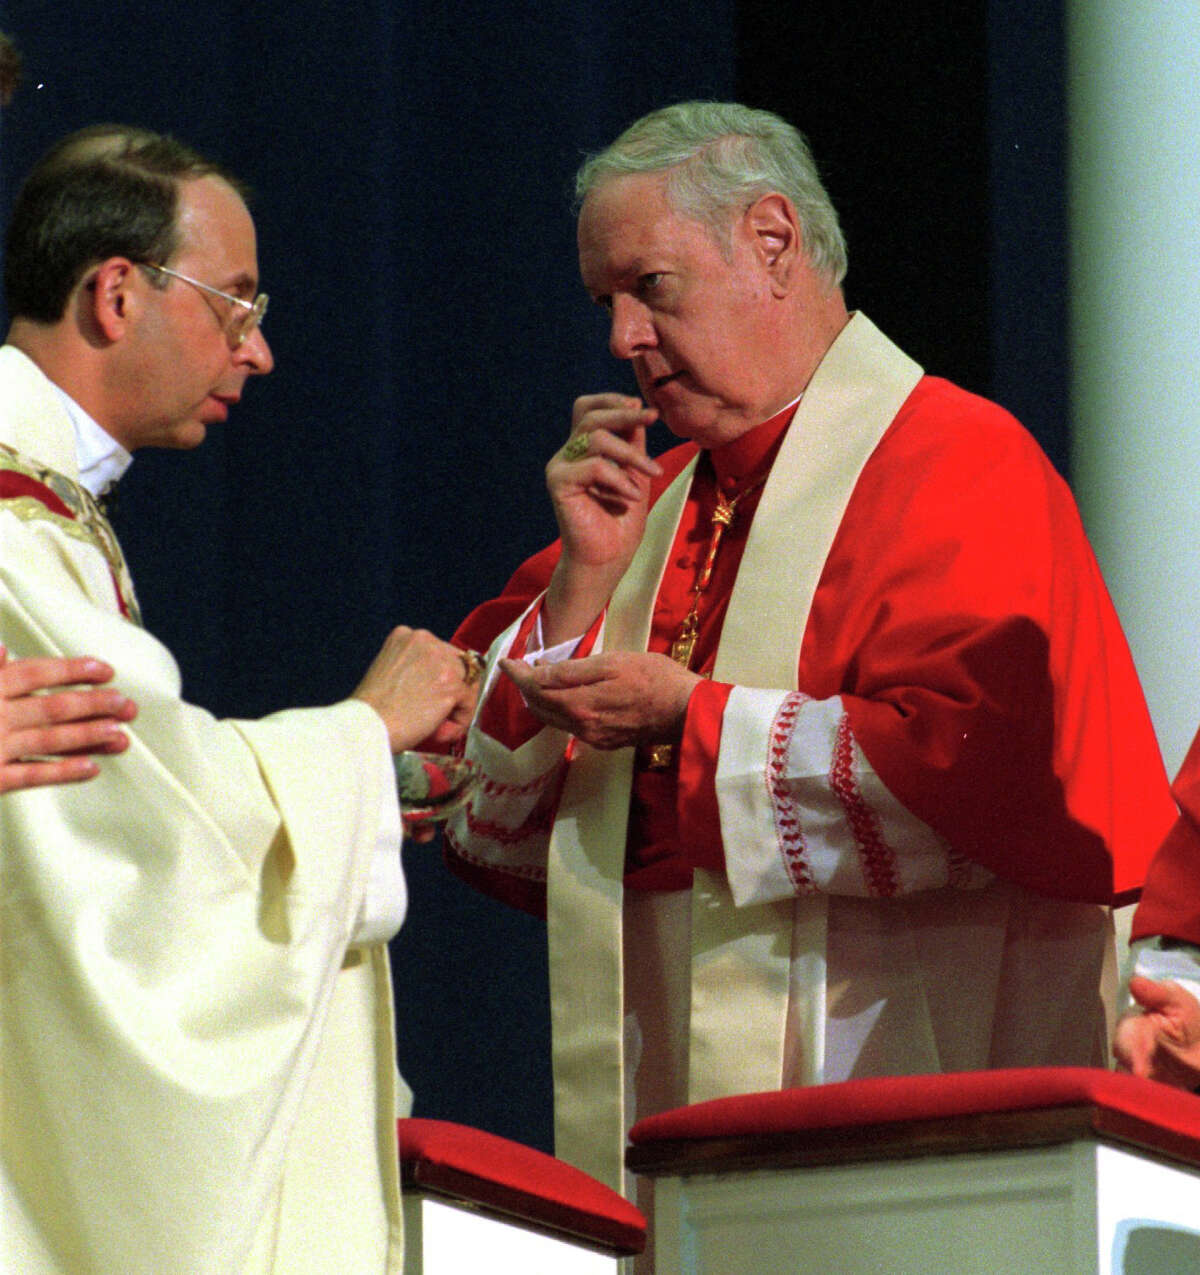 Cardinal Edward Michael Egan receives communion from his succesor Bishop William E. Lori during Lori's installation as the fourth Bishop of Bridgeport in 2001.